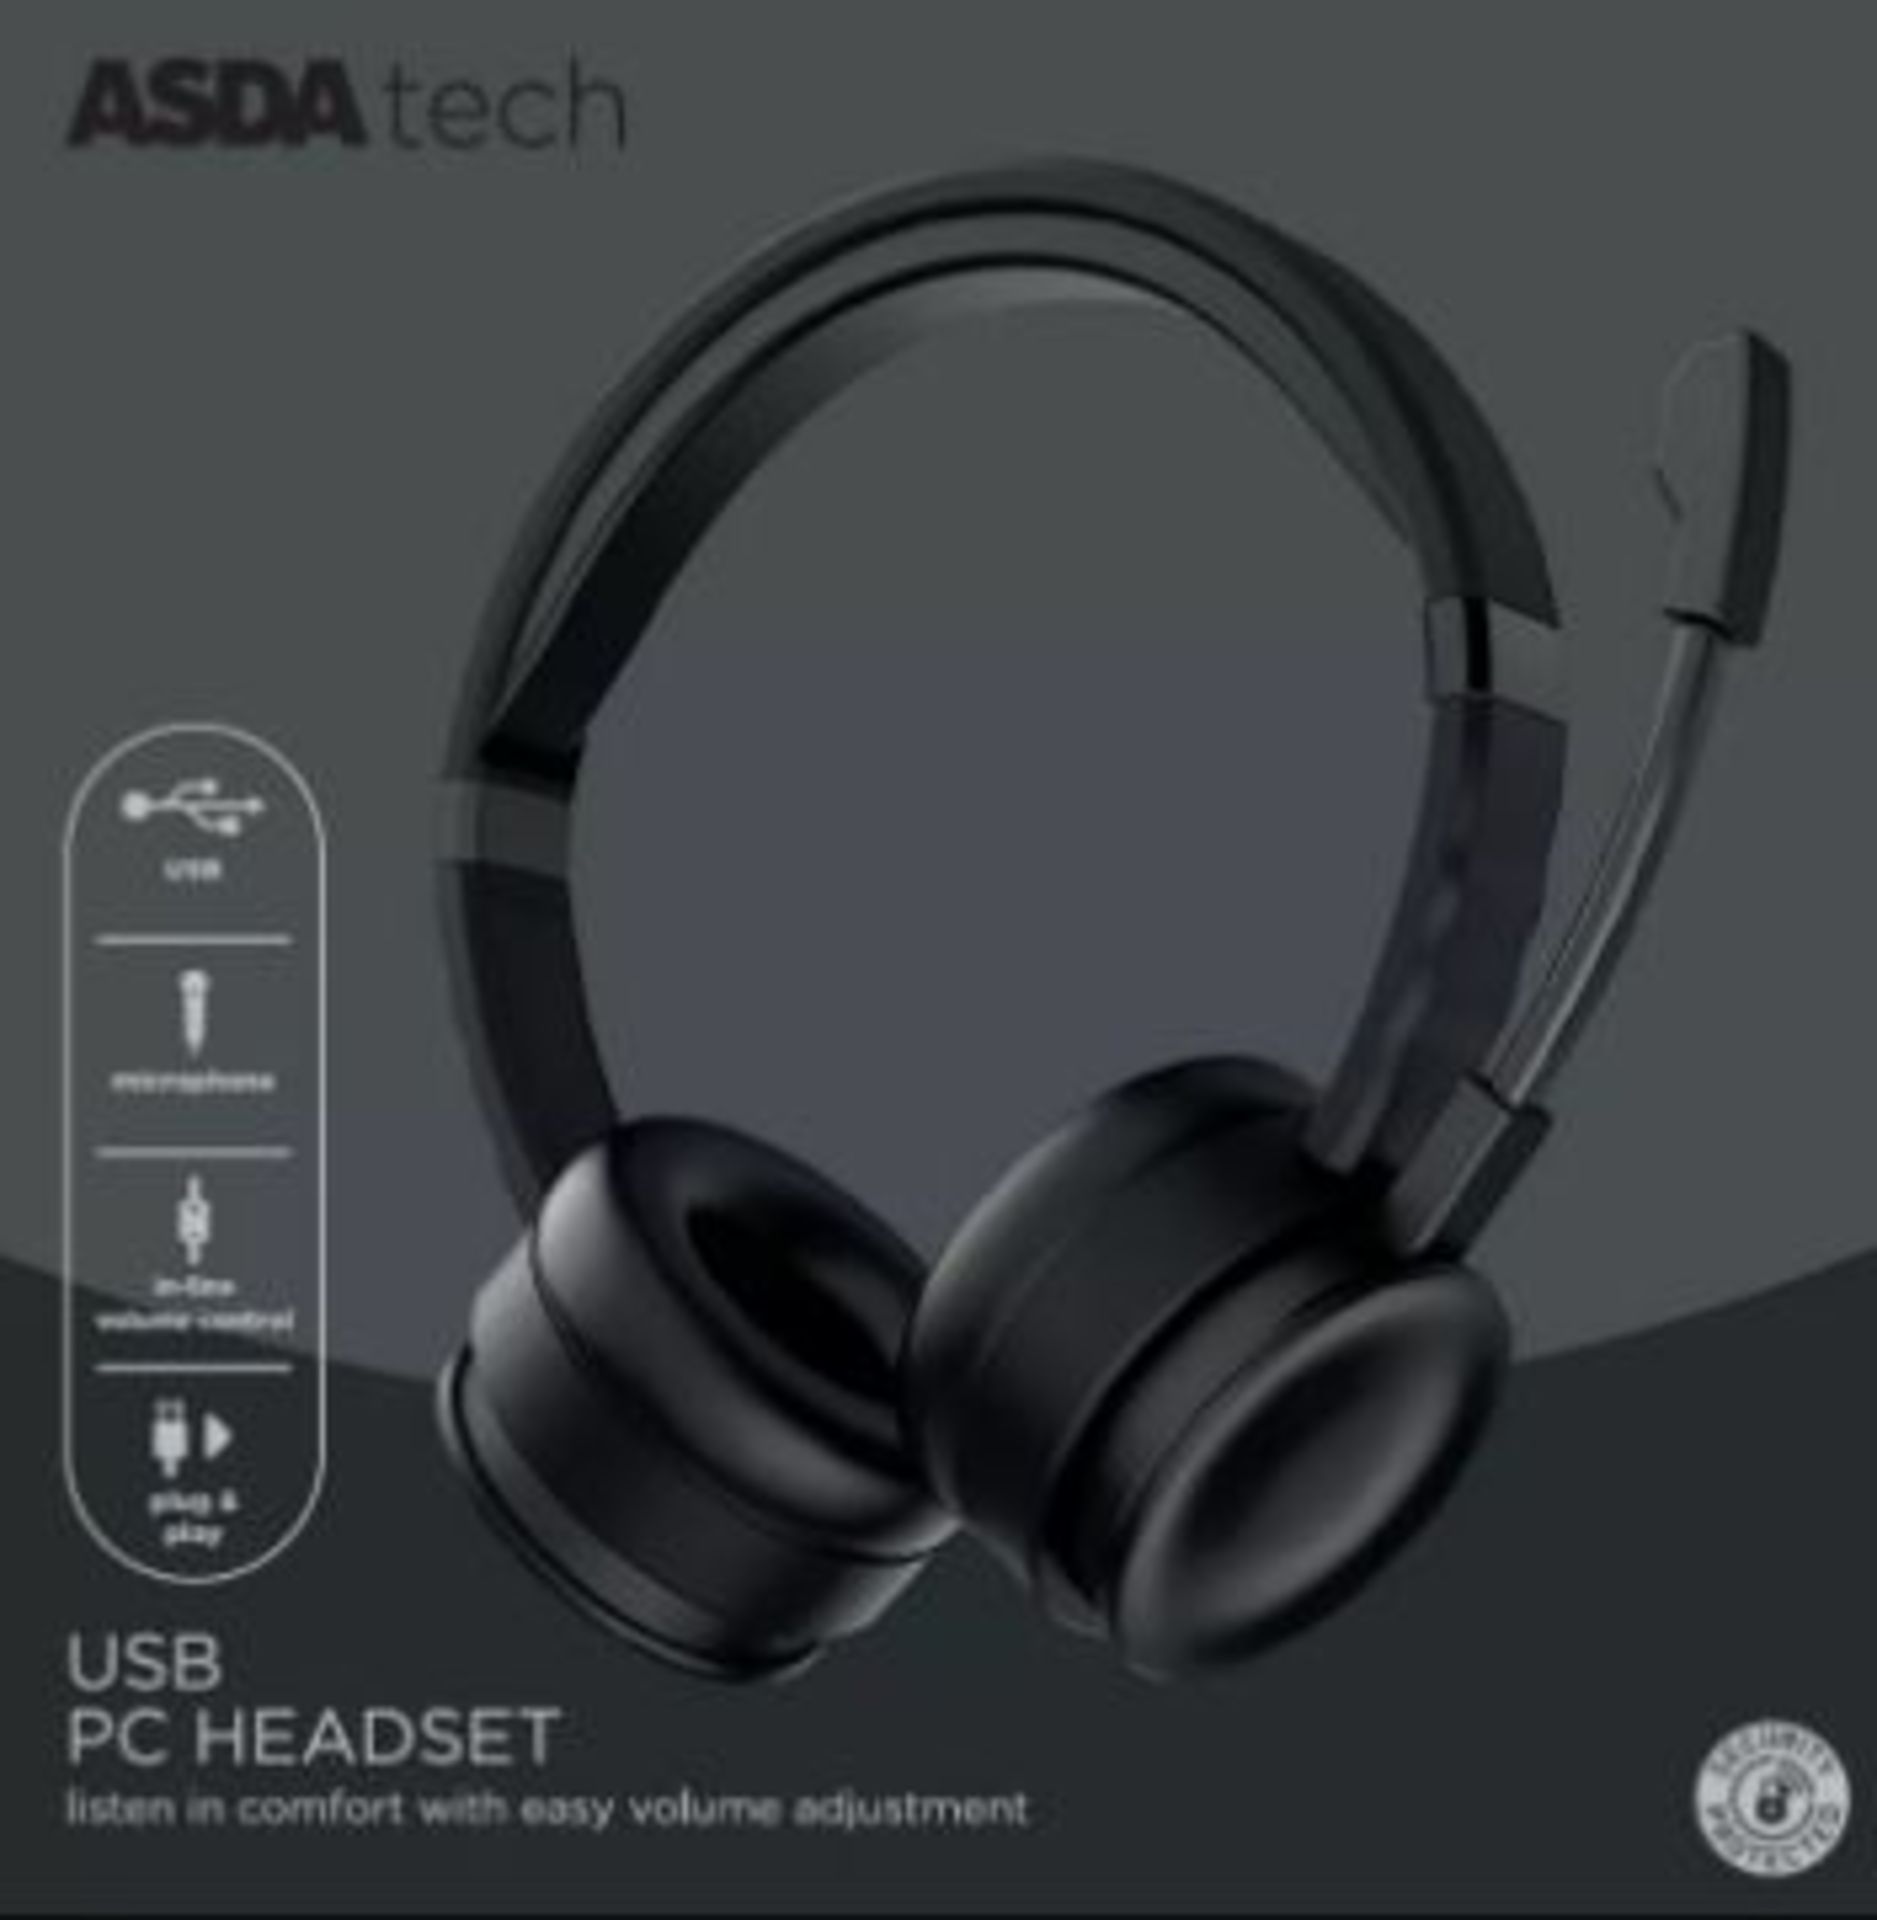 (10J) Lot RRP £175. 11x Headphone Items. 1x Asda Tech Gaming Headset RRP £25. 2x Onn Wireless Headp - Image 5 of 13